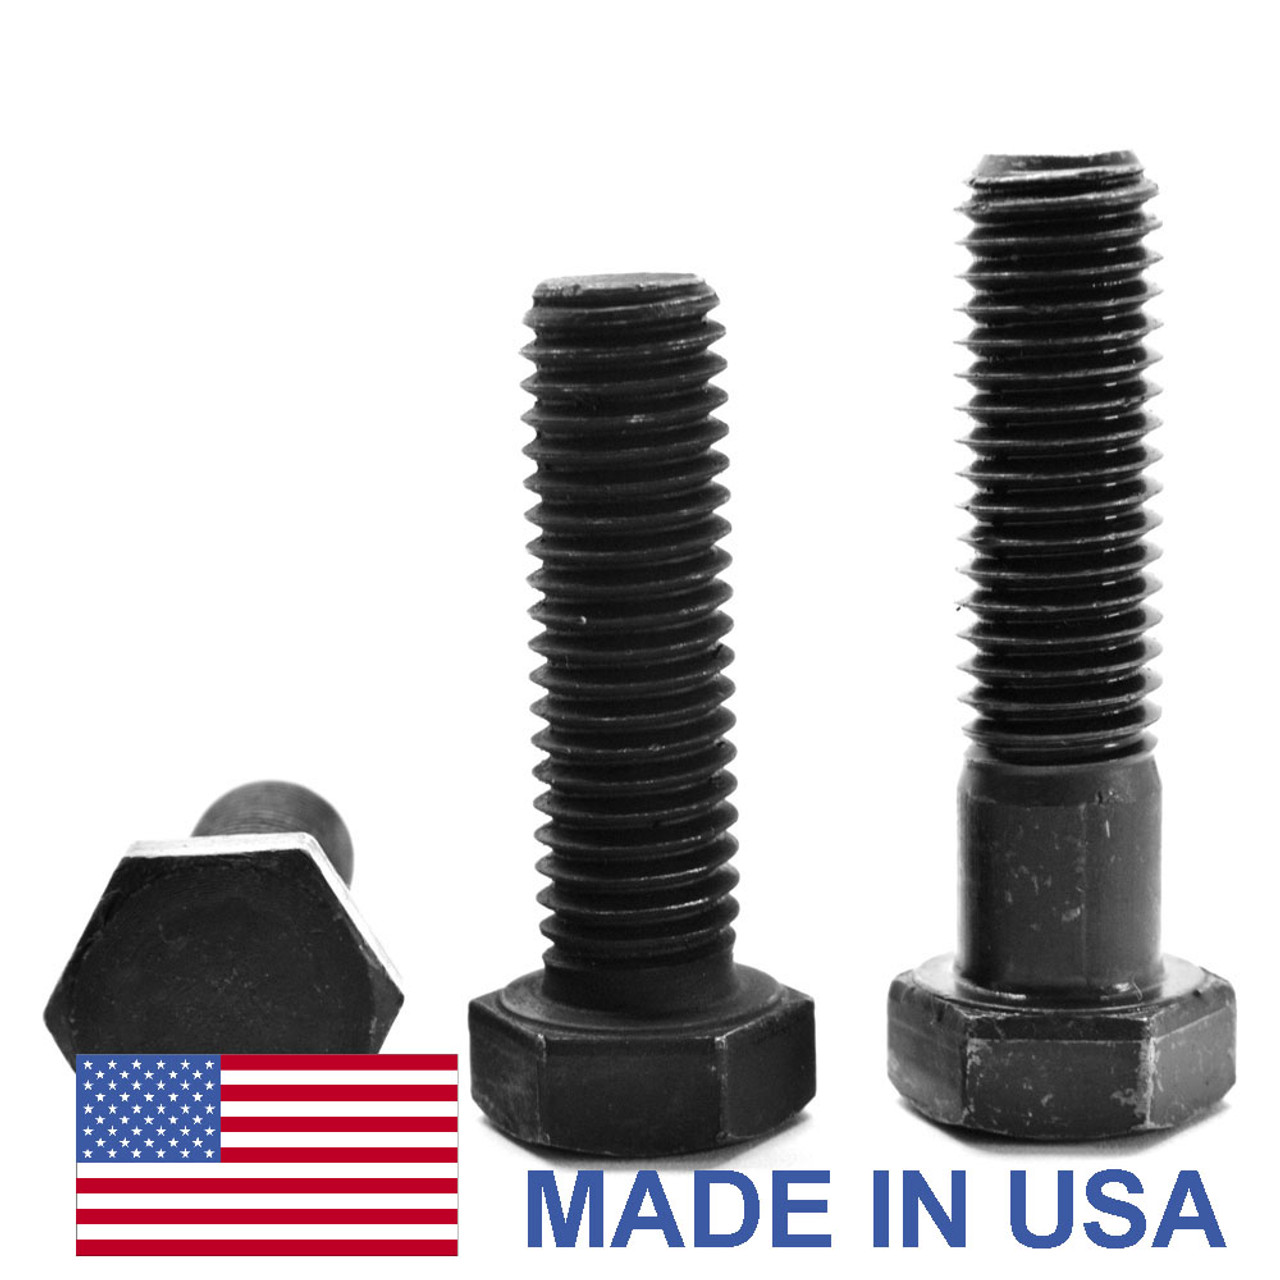 7/16"-14 x 4" (PT) Coarse Thread Grade 5 Hex Cap Screw (Bolt) - USA Medium Carbon Steel Black Oxide